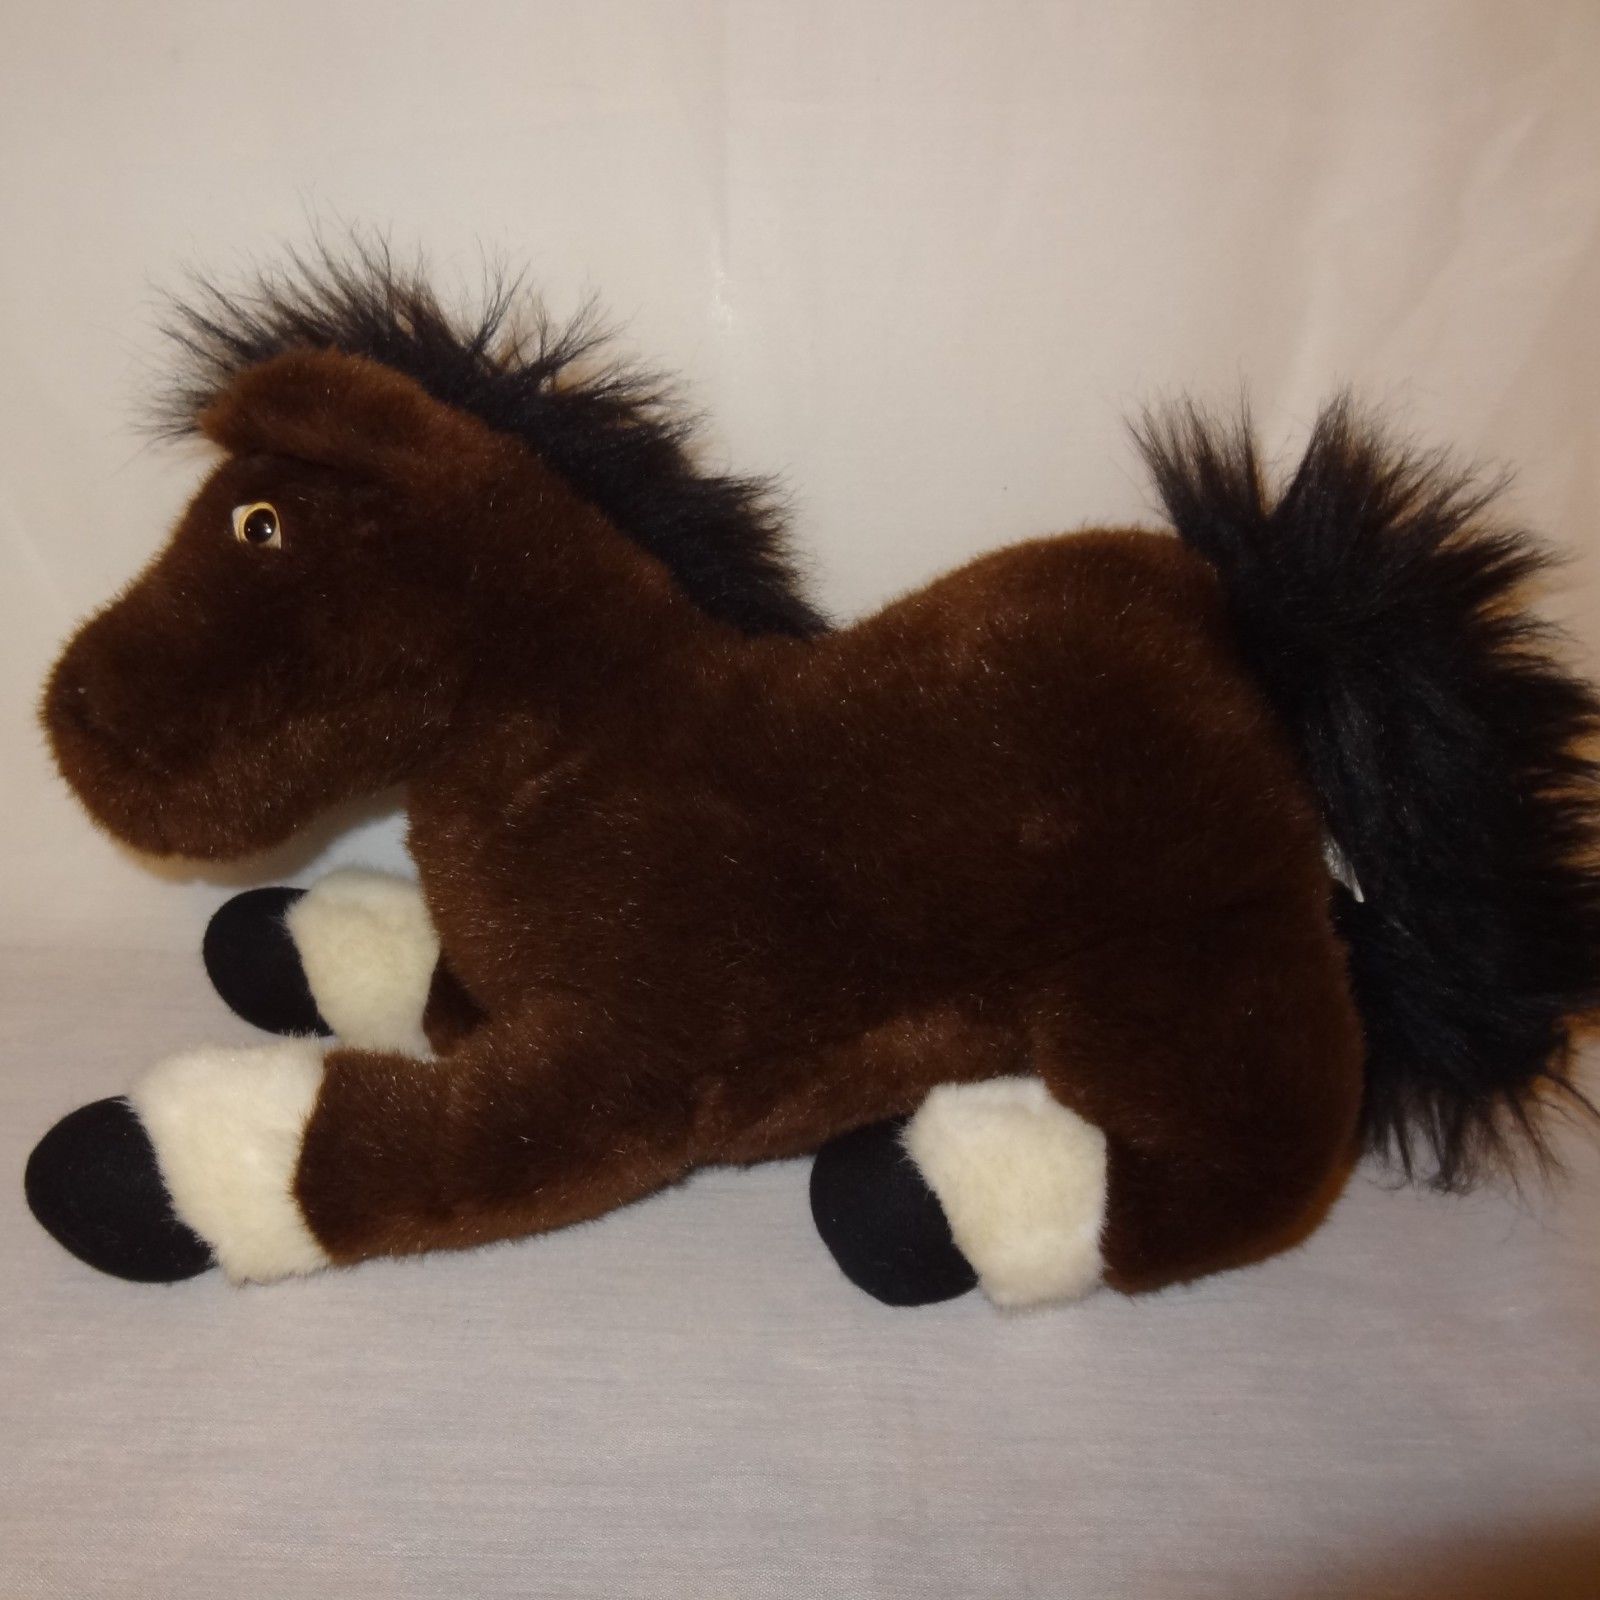 Horse Pony Brown White Stuffed Animal 15" Plush Toy Plushland - $14.89